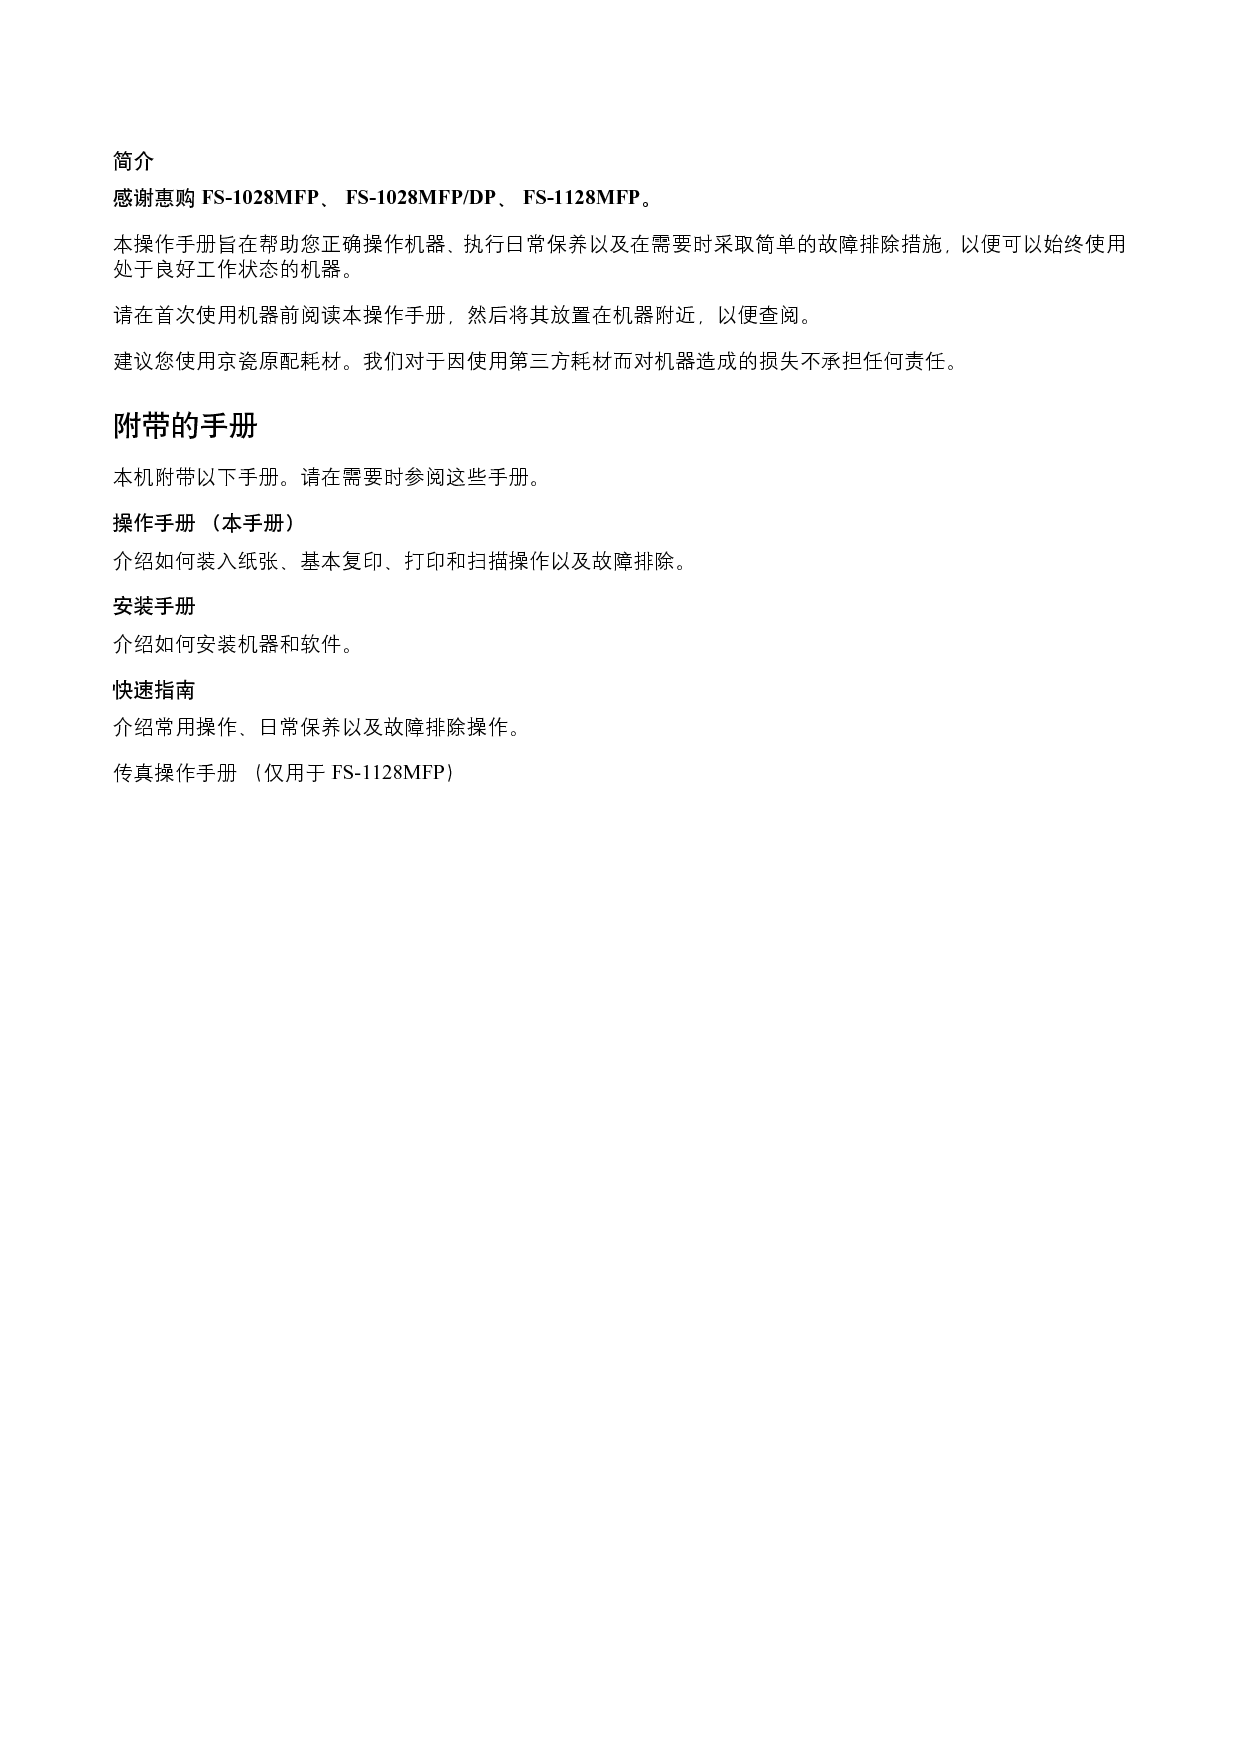 京瓷 Kyocera FS-1028MFP 操作手册 第1页